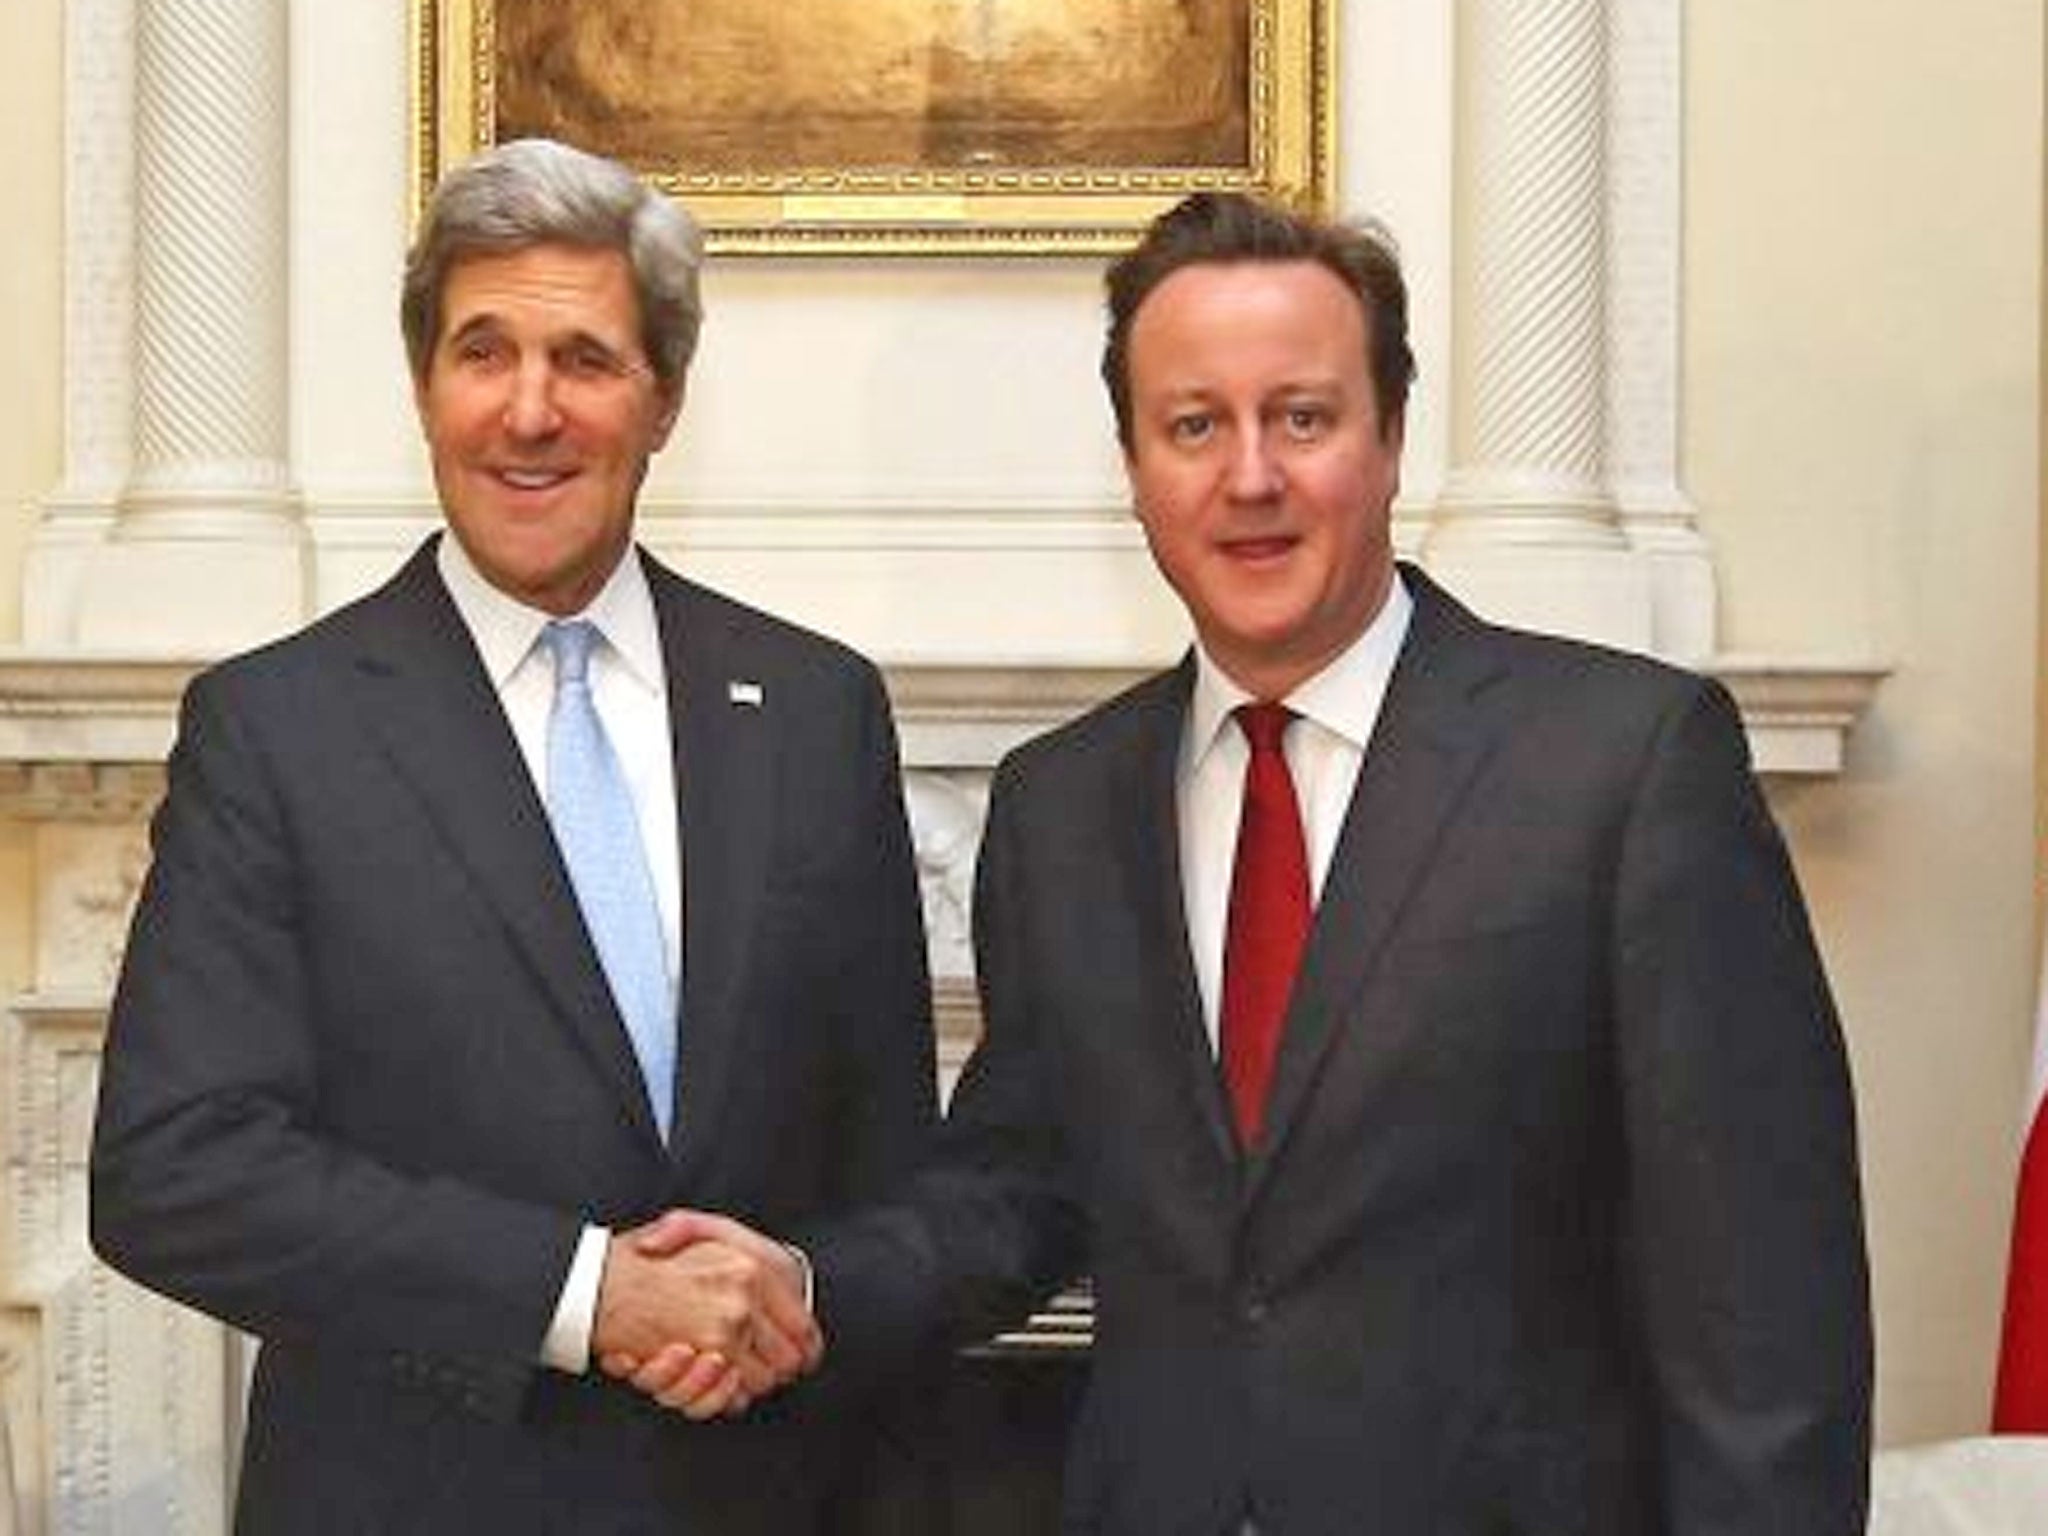 David Cameron with John Kerry in Downing Street